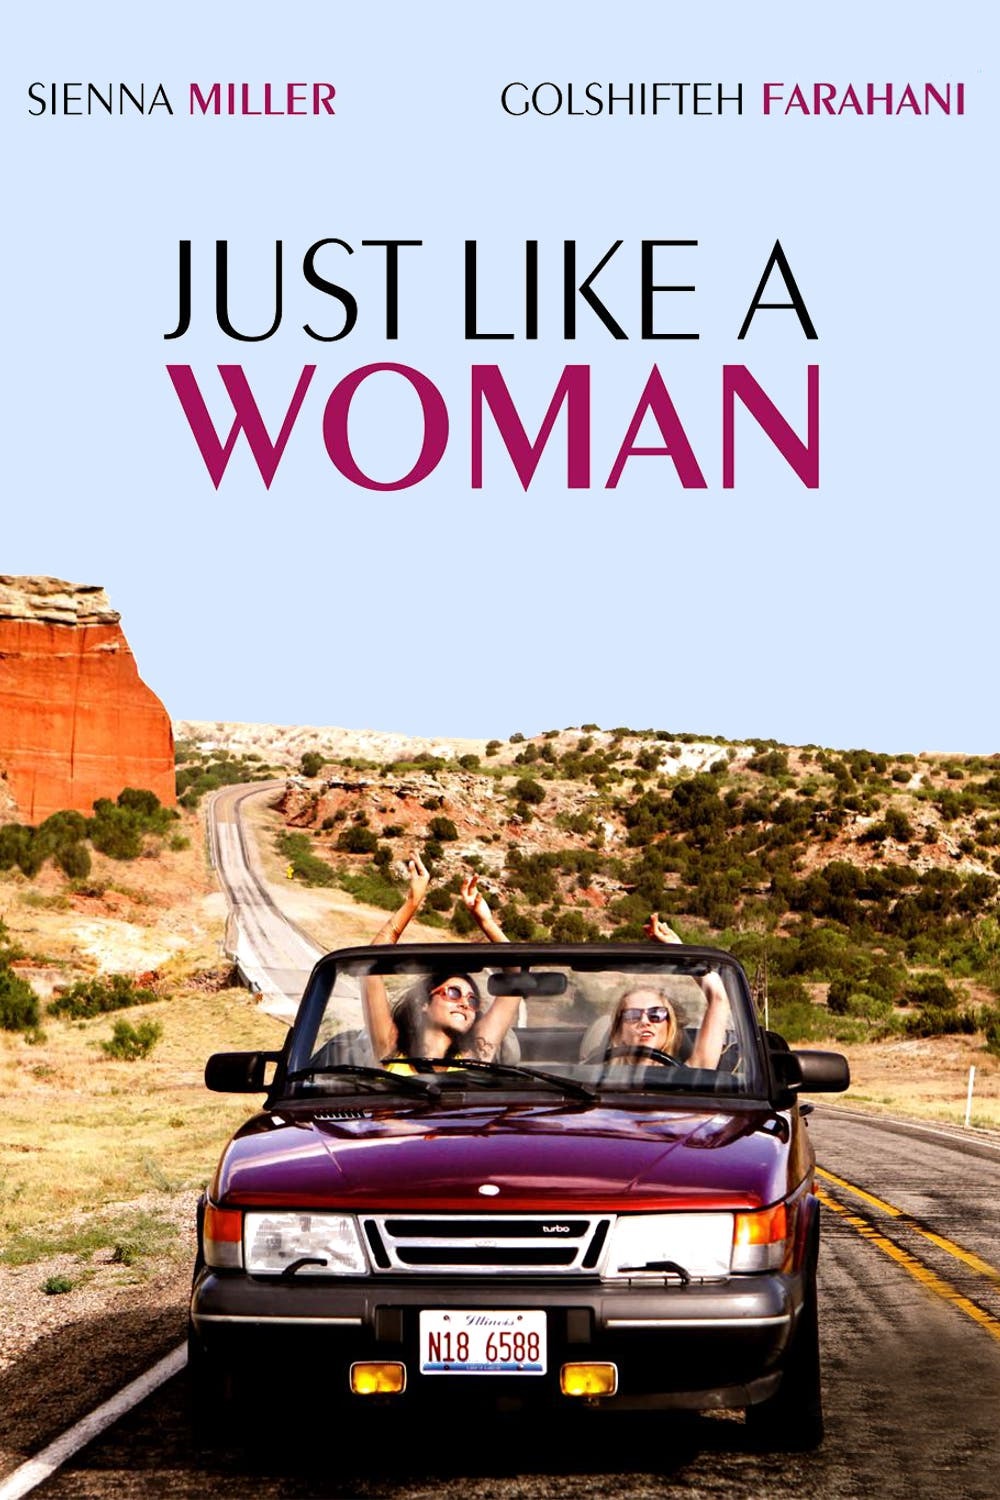 Just Like a Woman (2013)